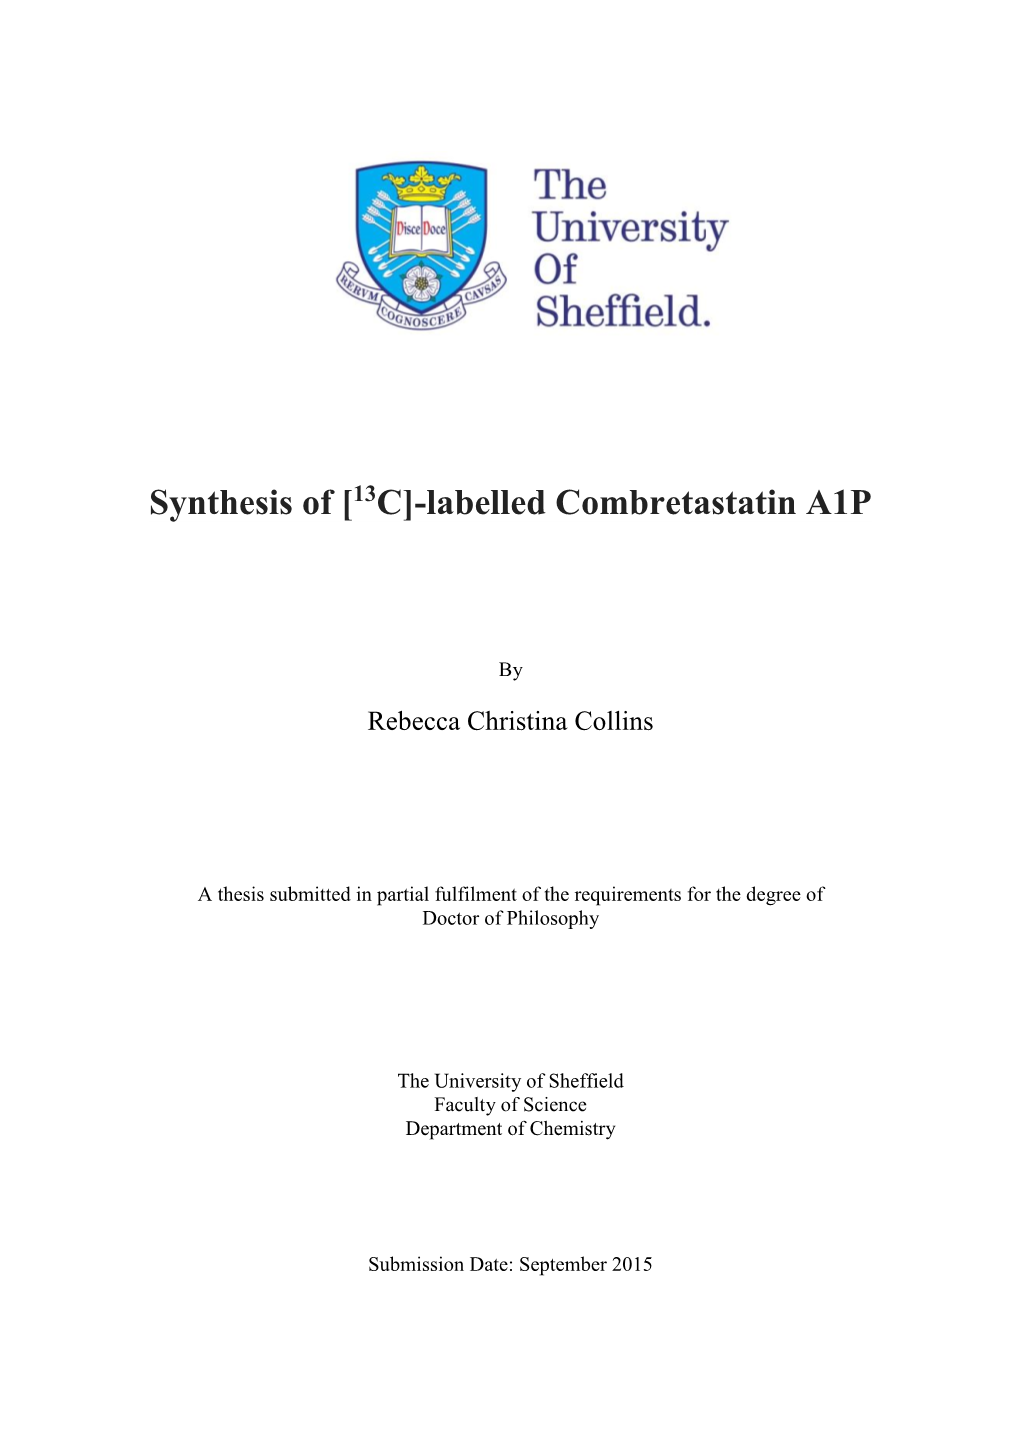 Labelled Combretastatin A1P